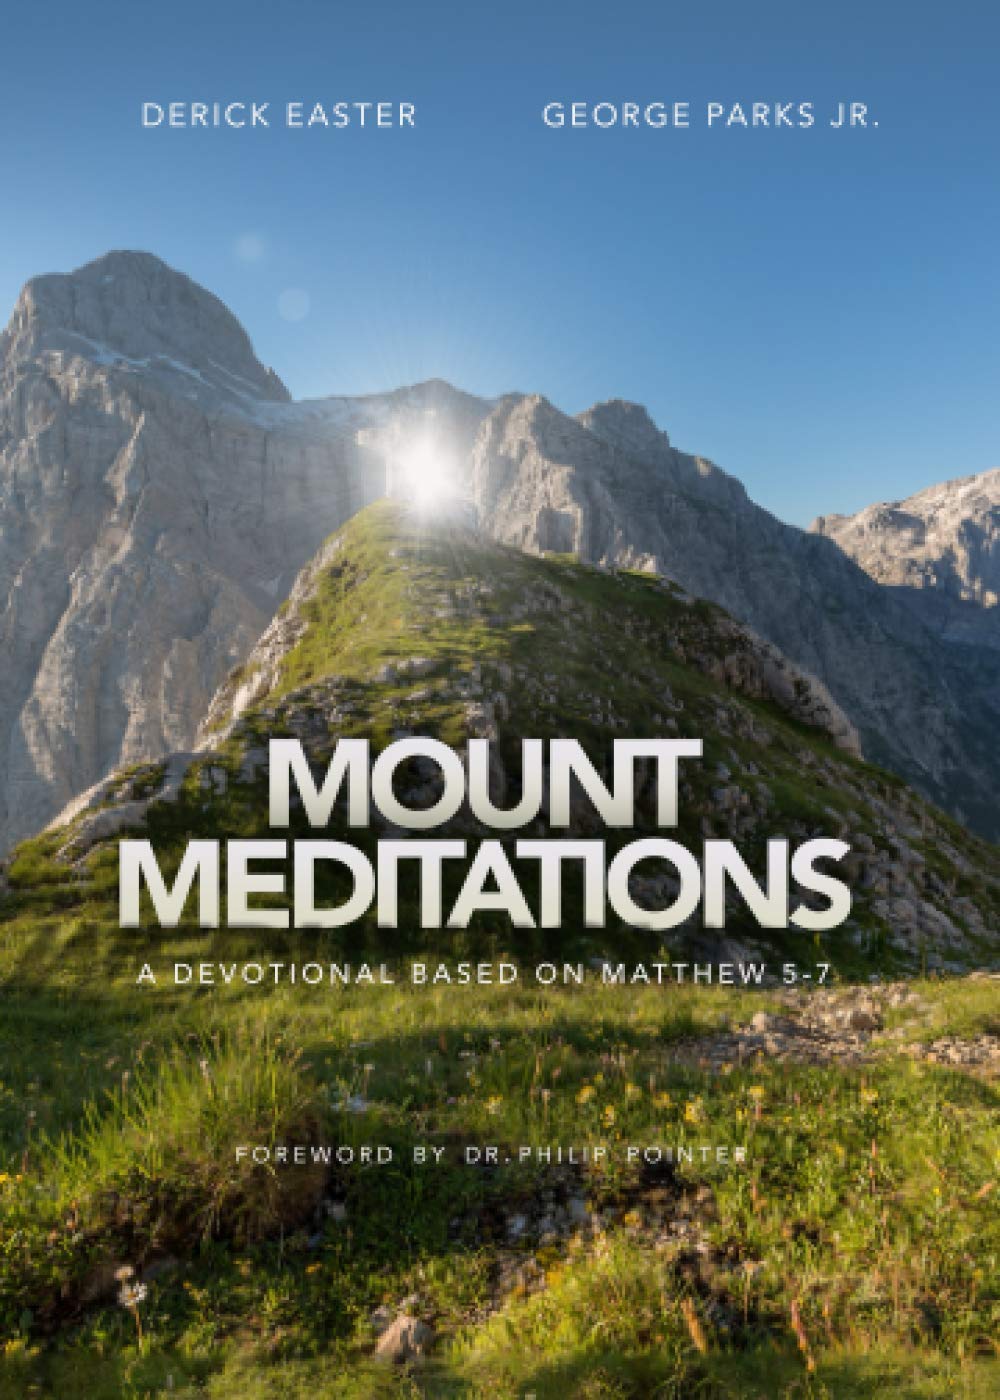 Mount Meditations: A Devotional based on Matthew 5-7